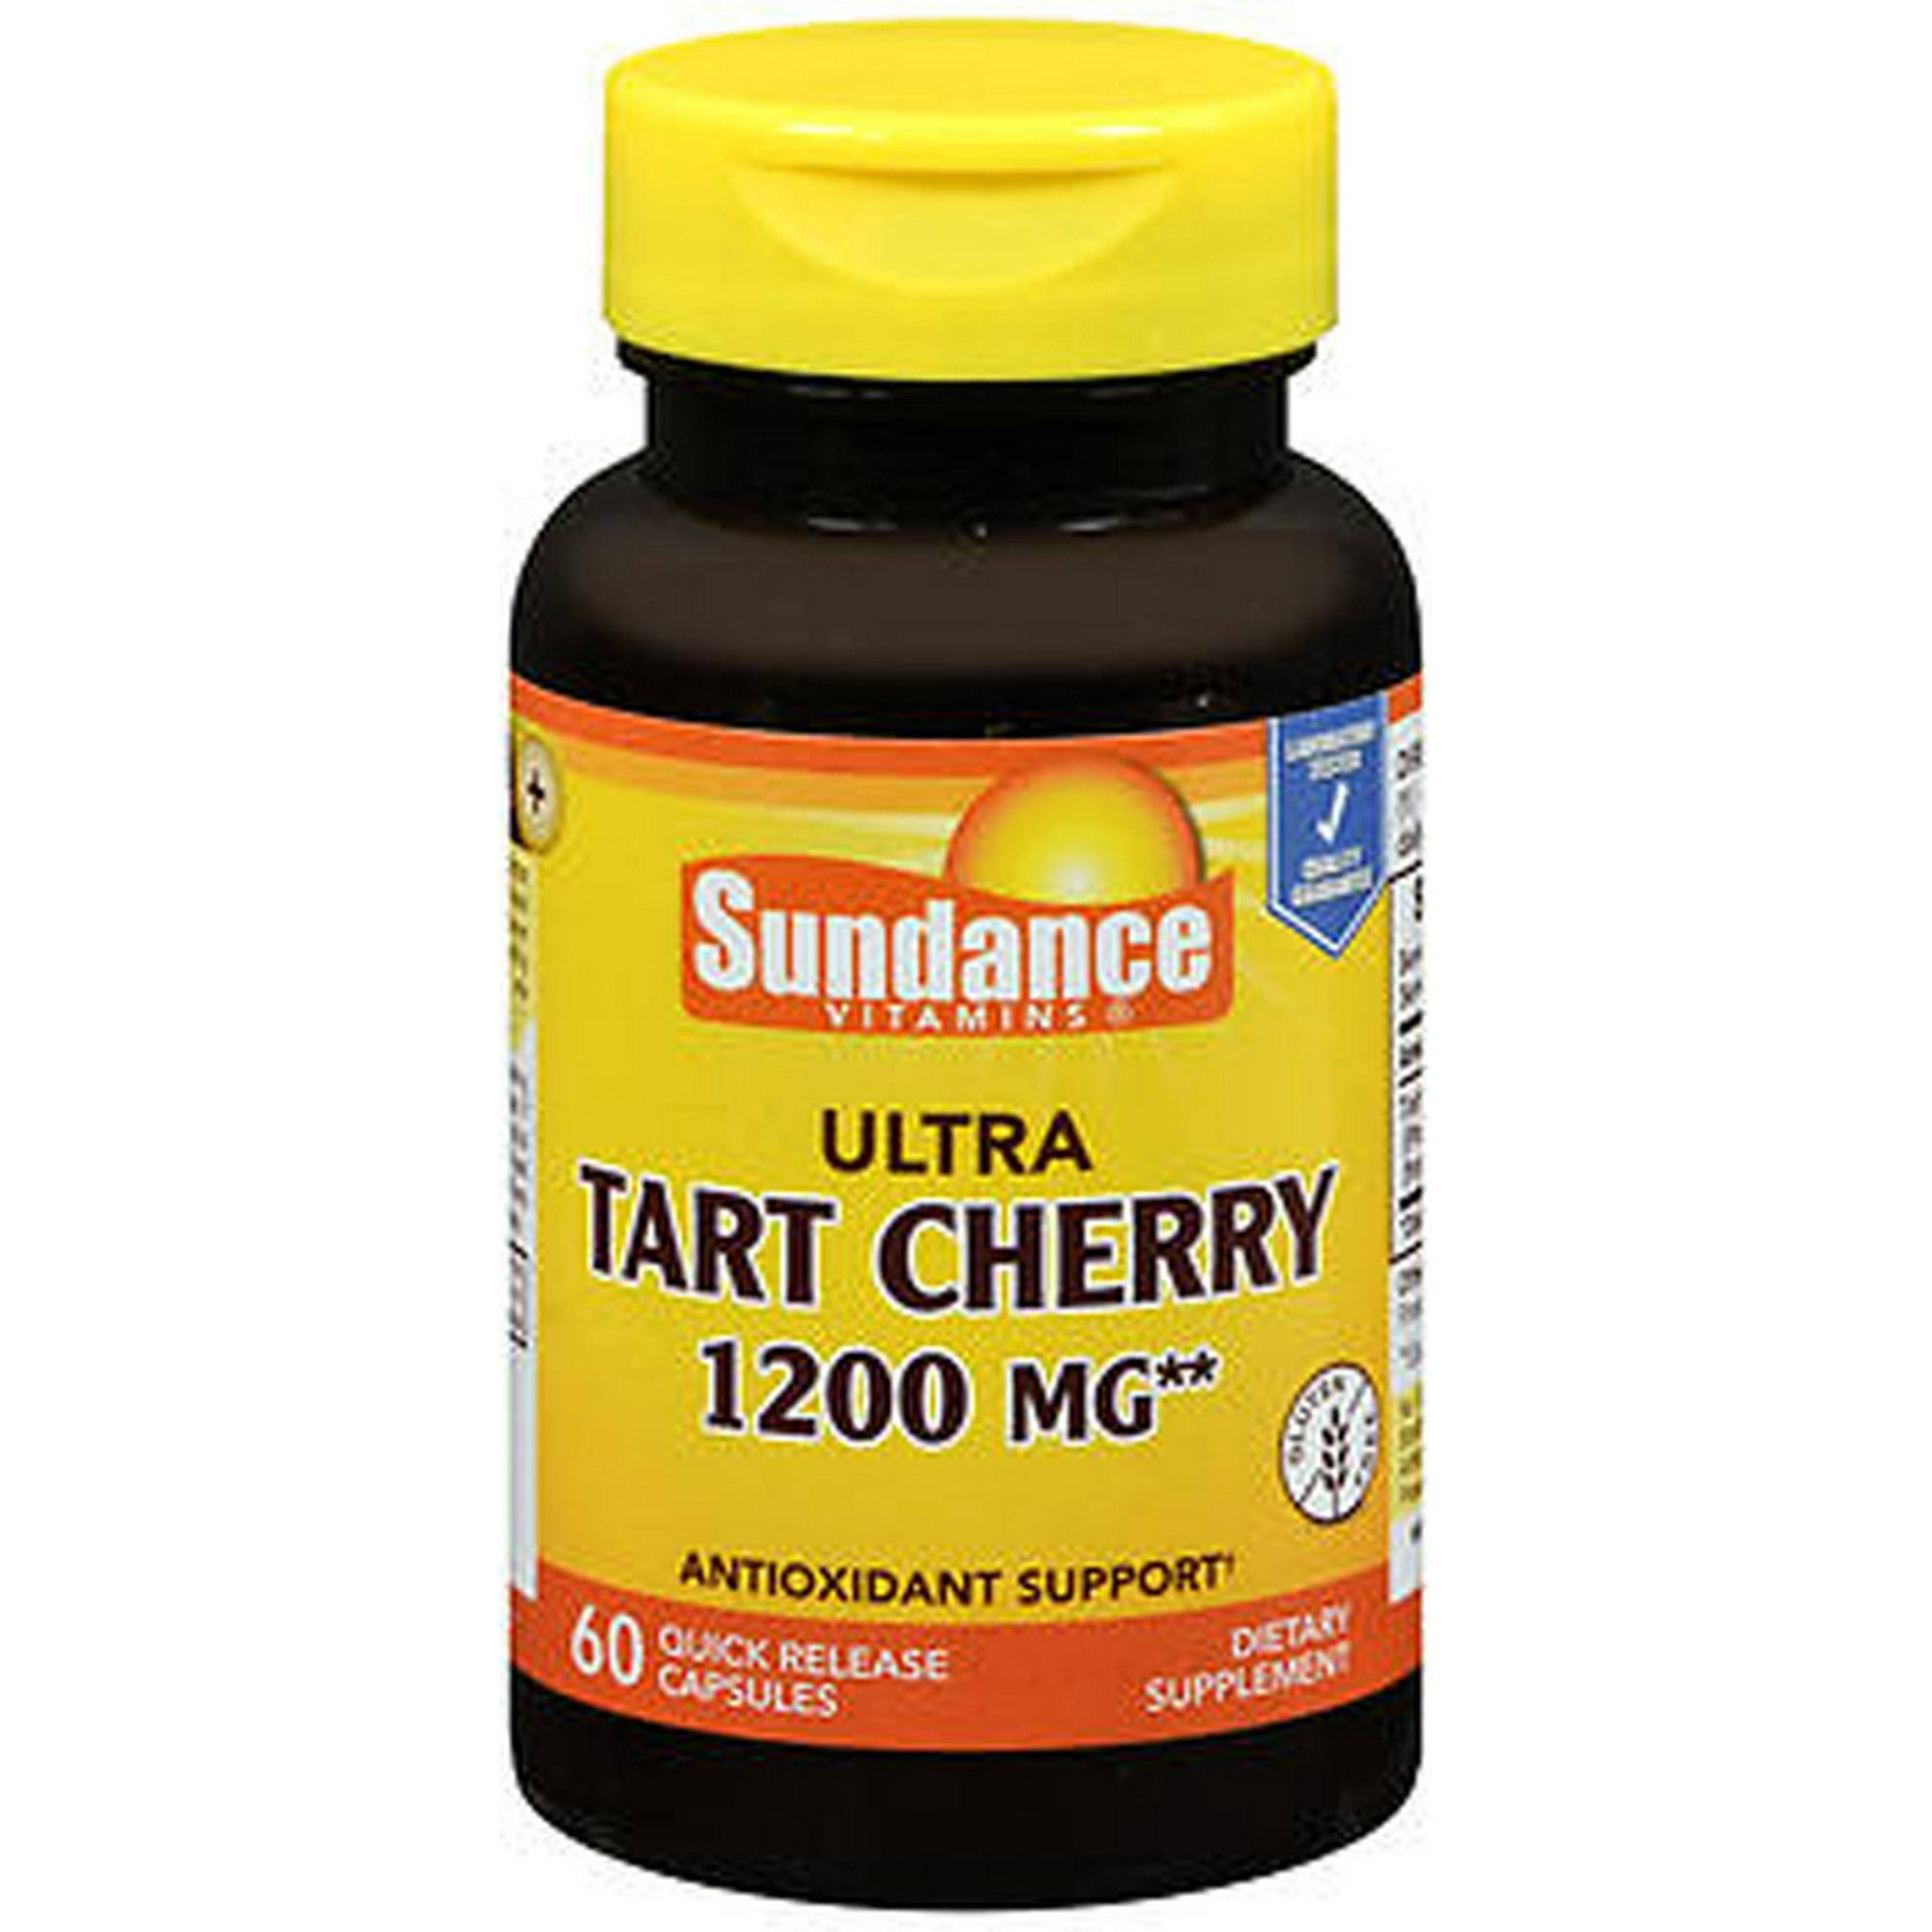 Sundance Ultra Tart Cherry - 1200mg